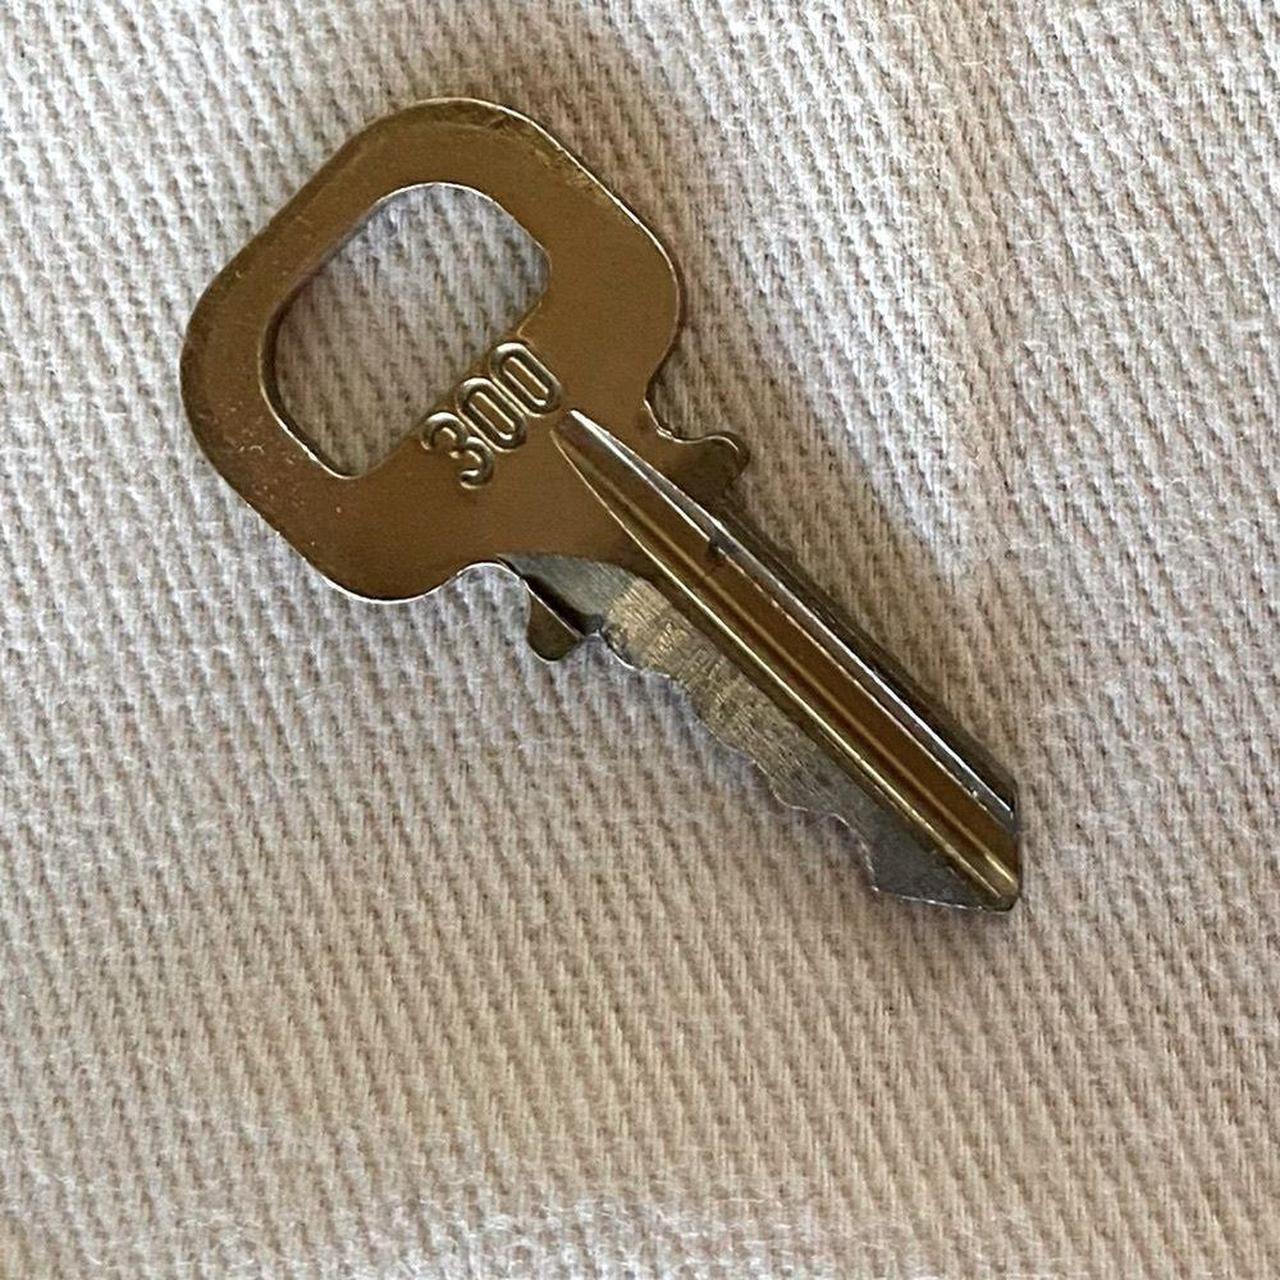 Authentic Louis Vuitton brass pad lock and key set. - Depop